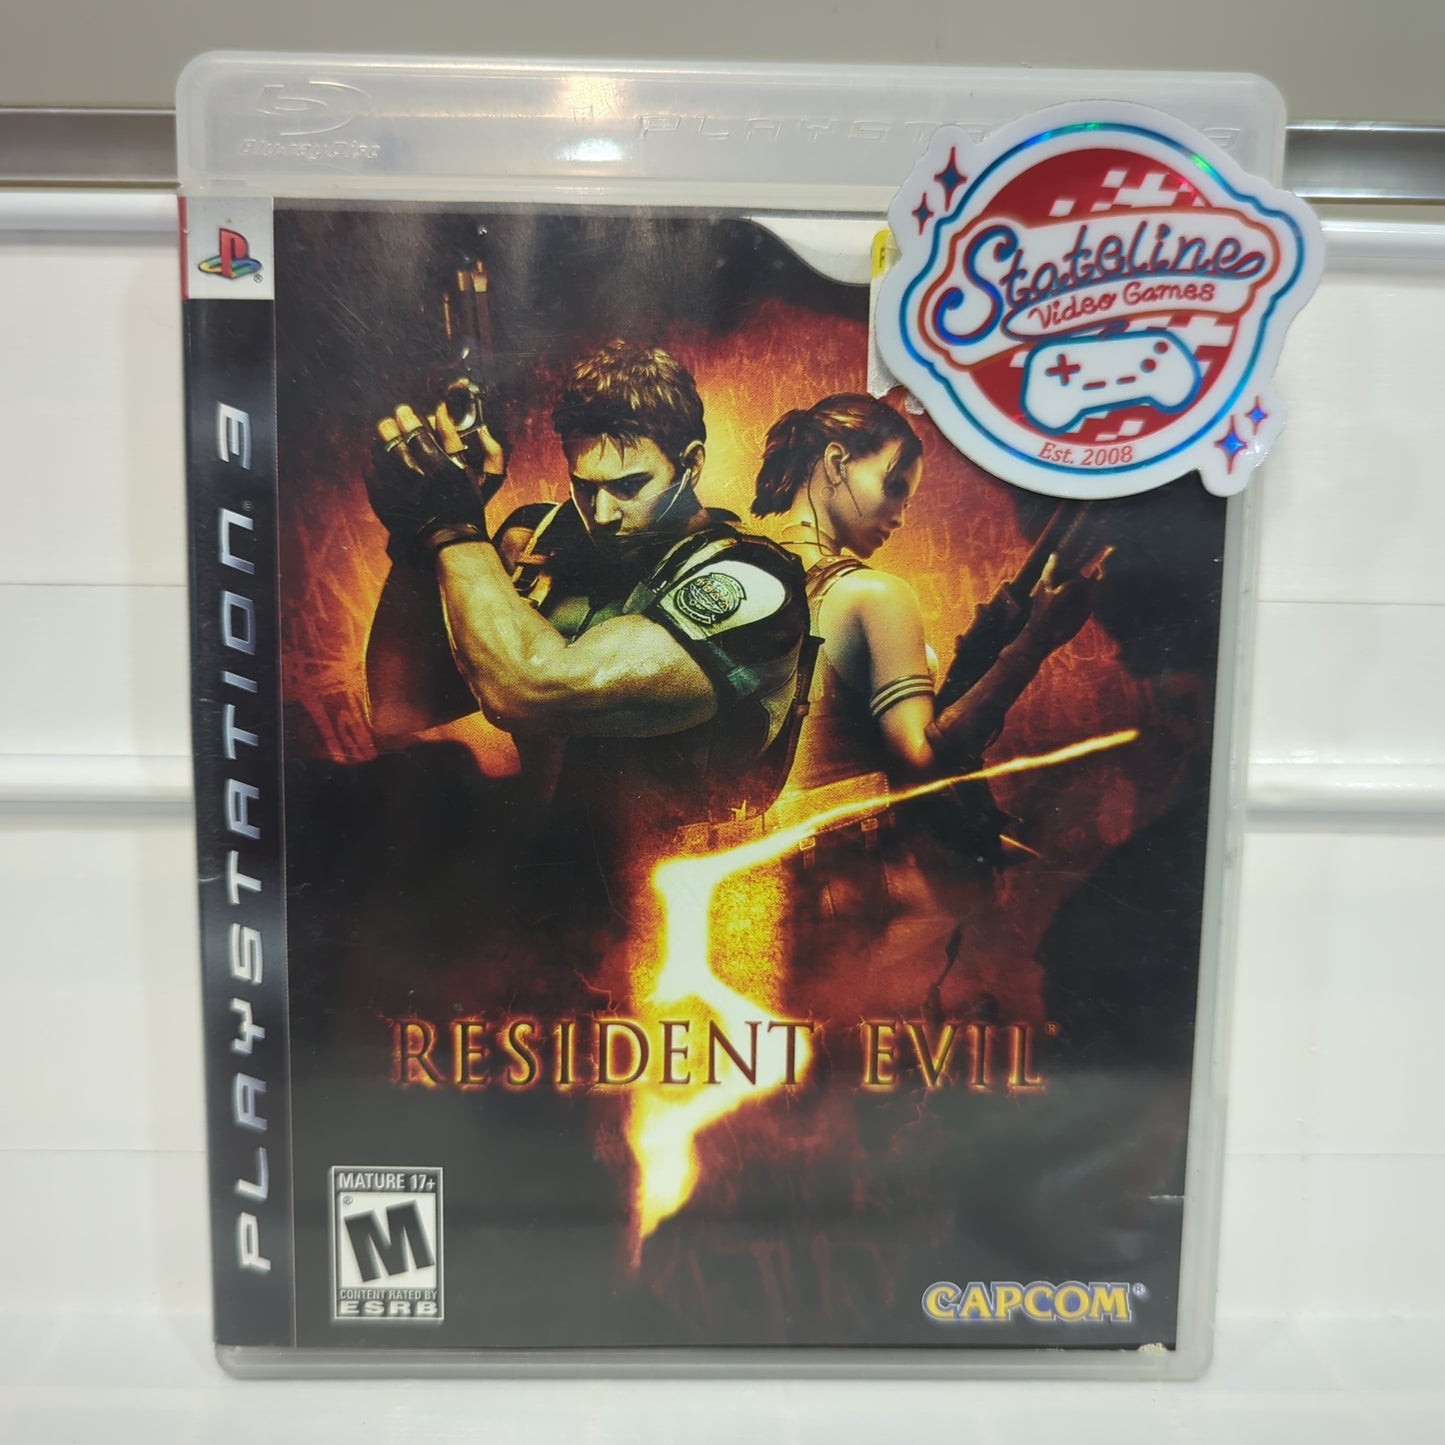 Resident Evil 5 - Playstation 3